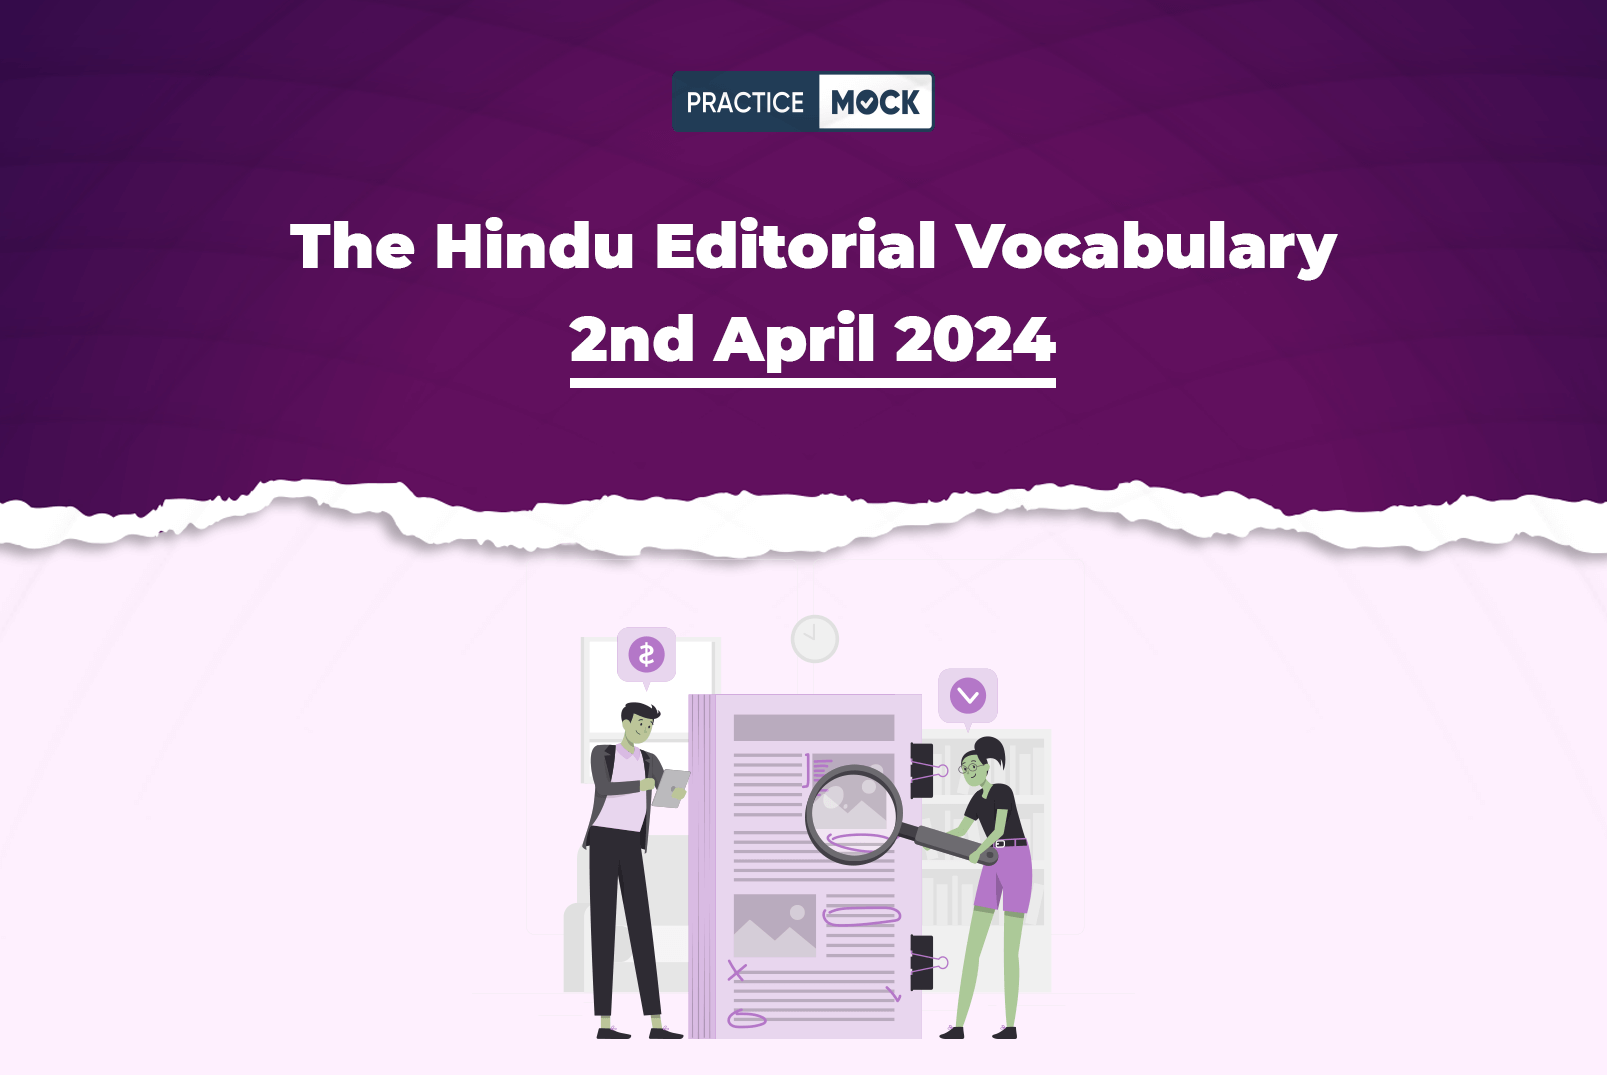 The Hindu Editorial Vocabulary 2nd April 2024